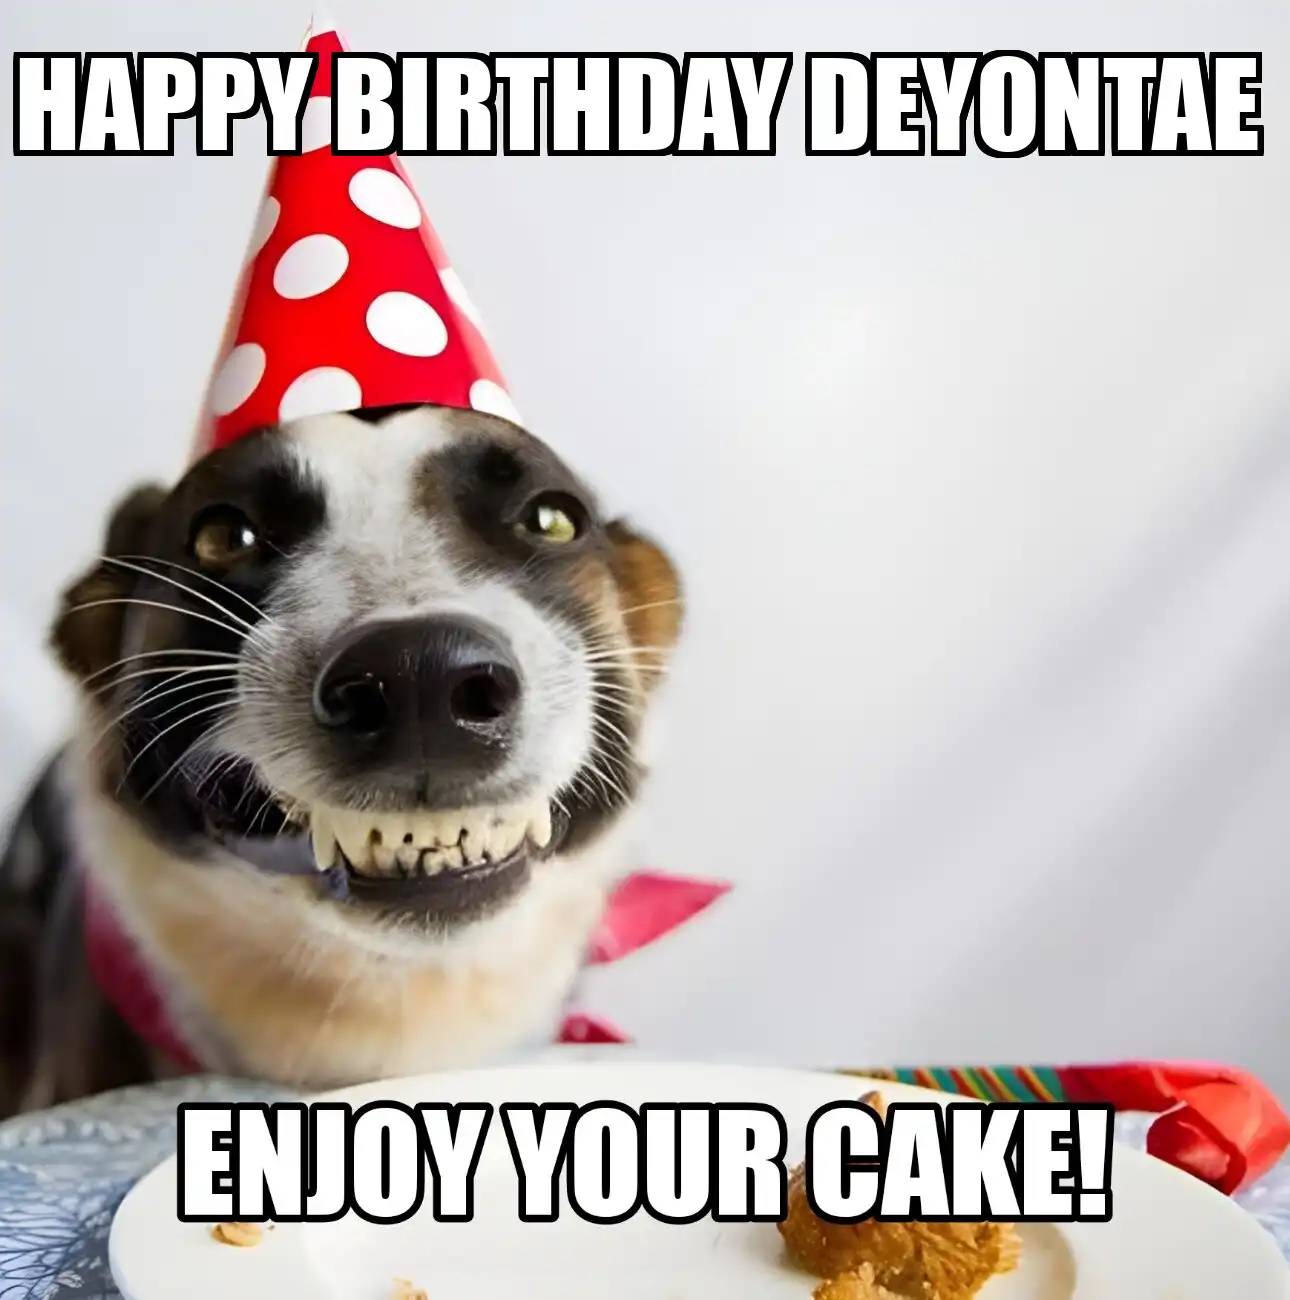 Happy Birthday Deyontae Enjoy Your Cake Dog Meme